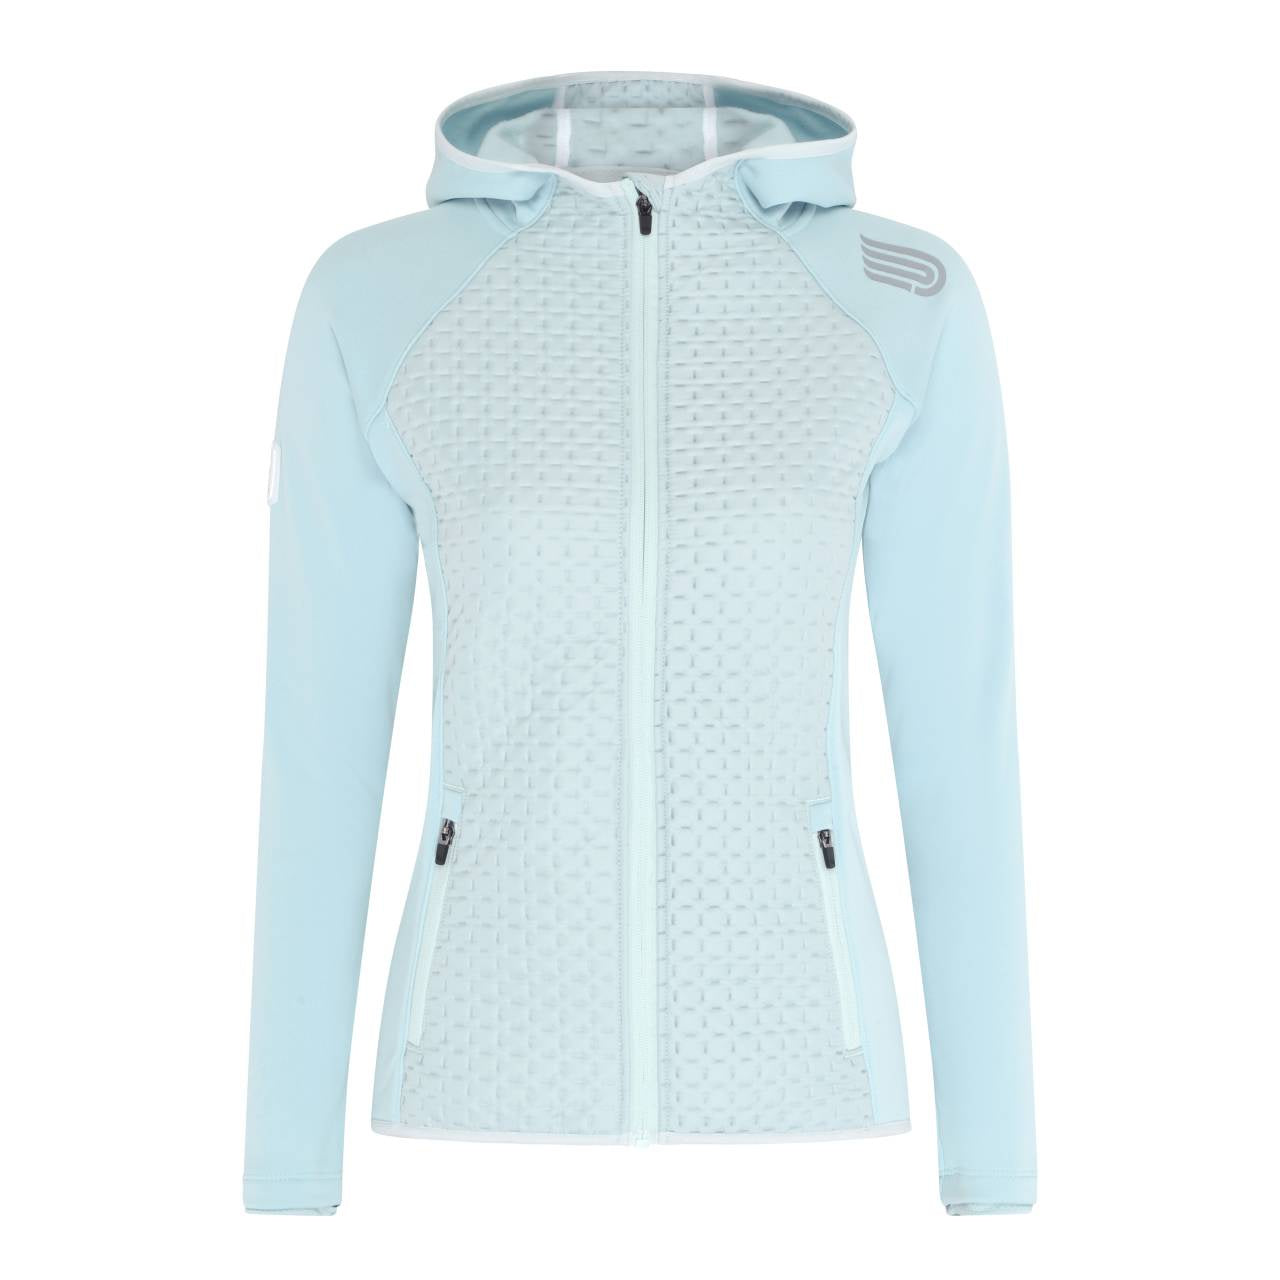 | Ltd Delivery RunActive Jackets Prosportswear Women\'s – | £30 Free T/A Over RunActive